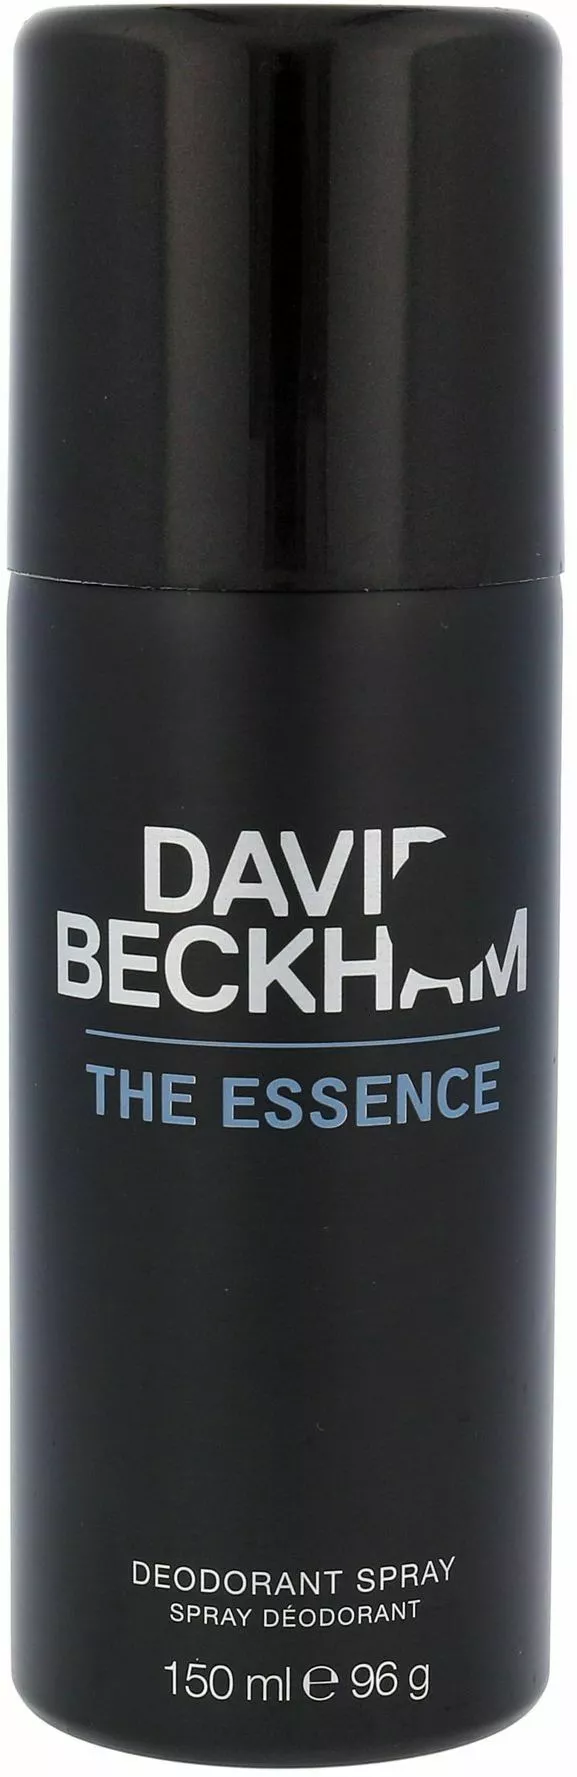 david beckham the essence dezodorant 150 ml